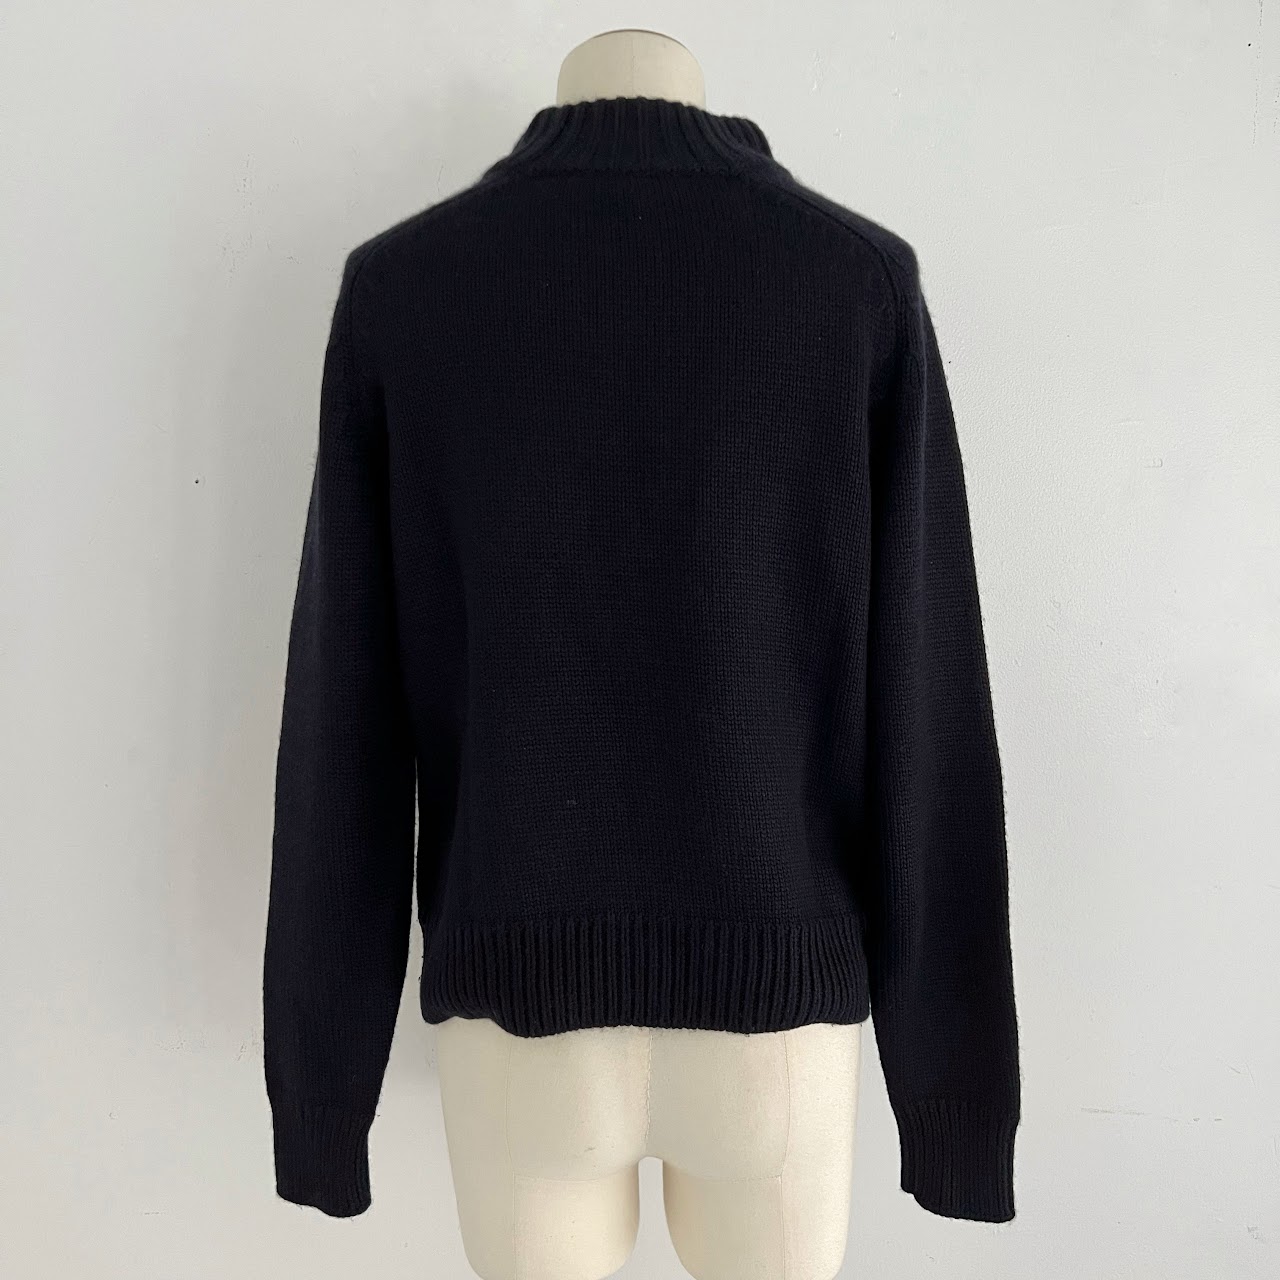 Hermès Black Turtleneck Sweater